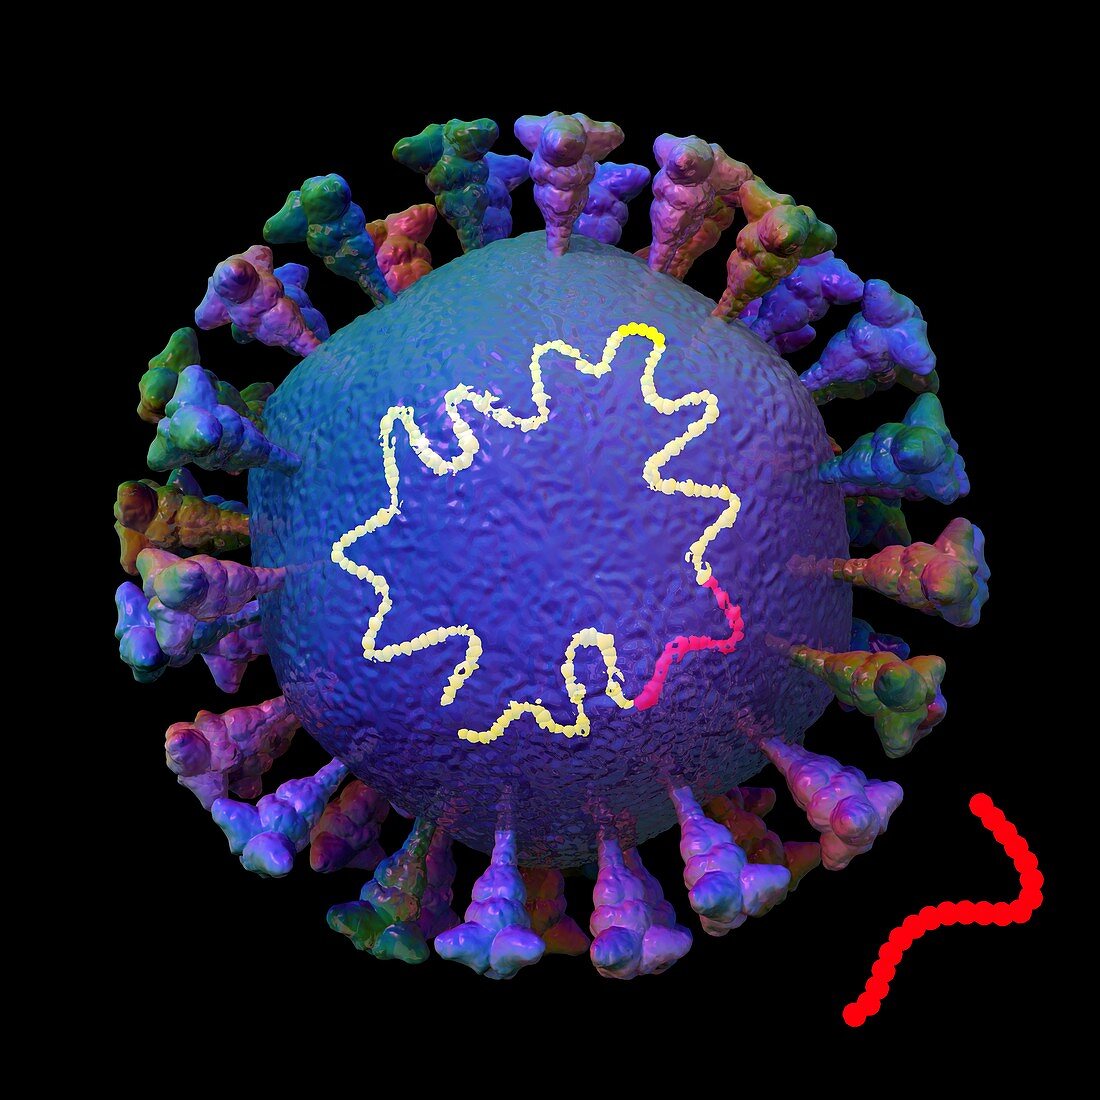 Creating new coronavirus strain, conceptual illustration